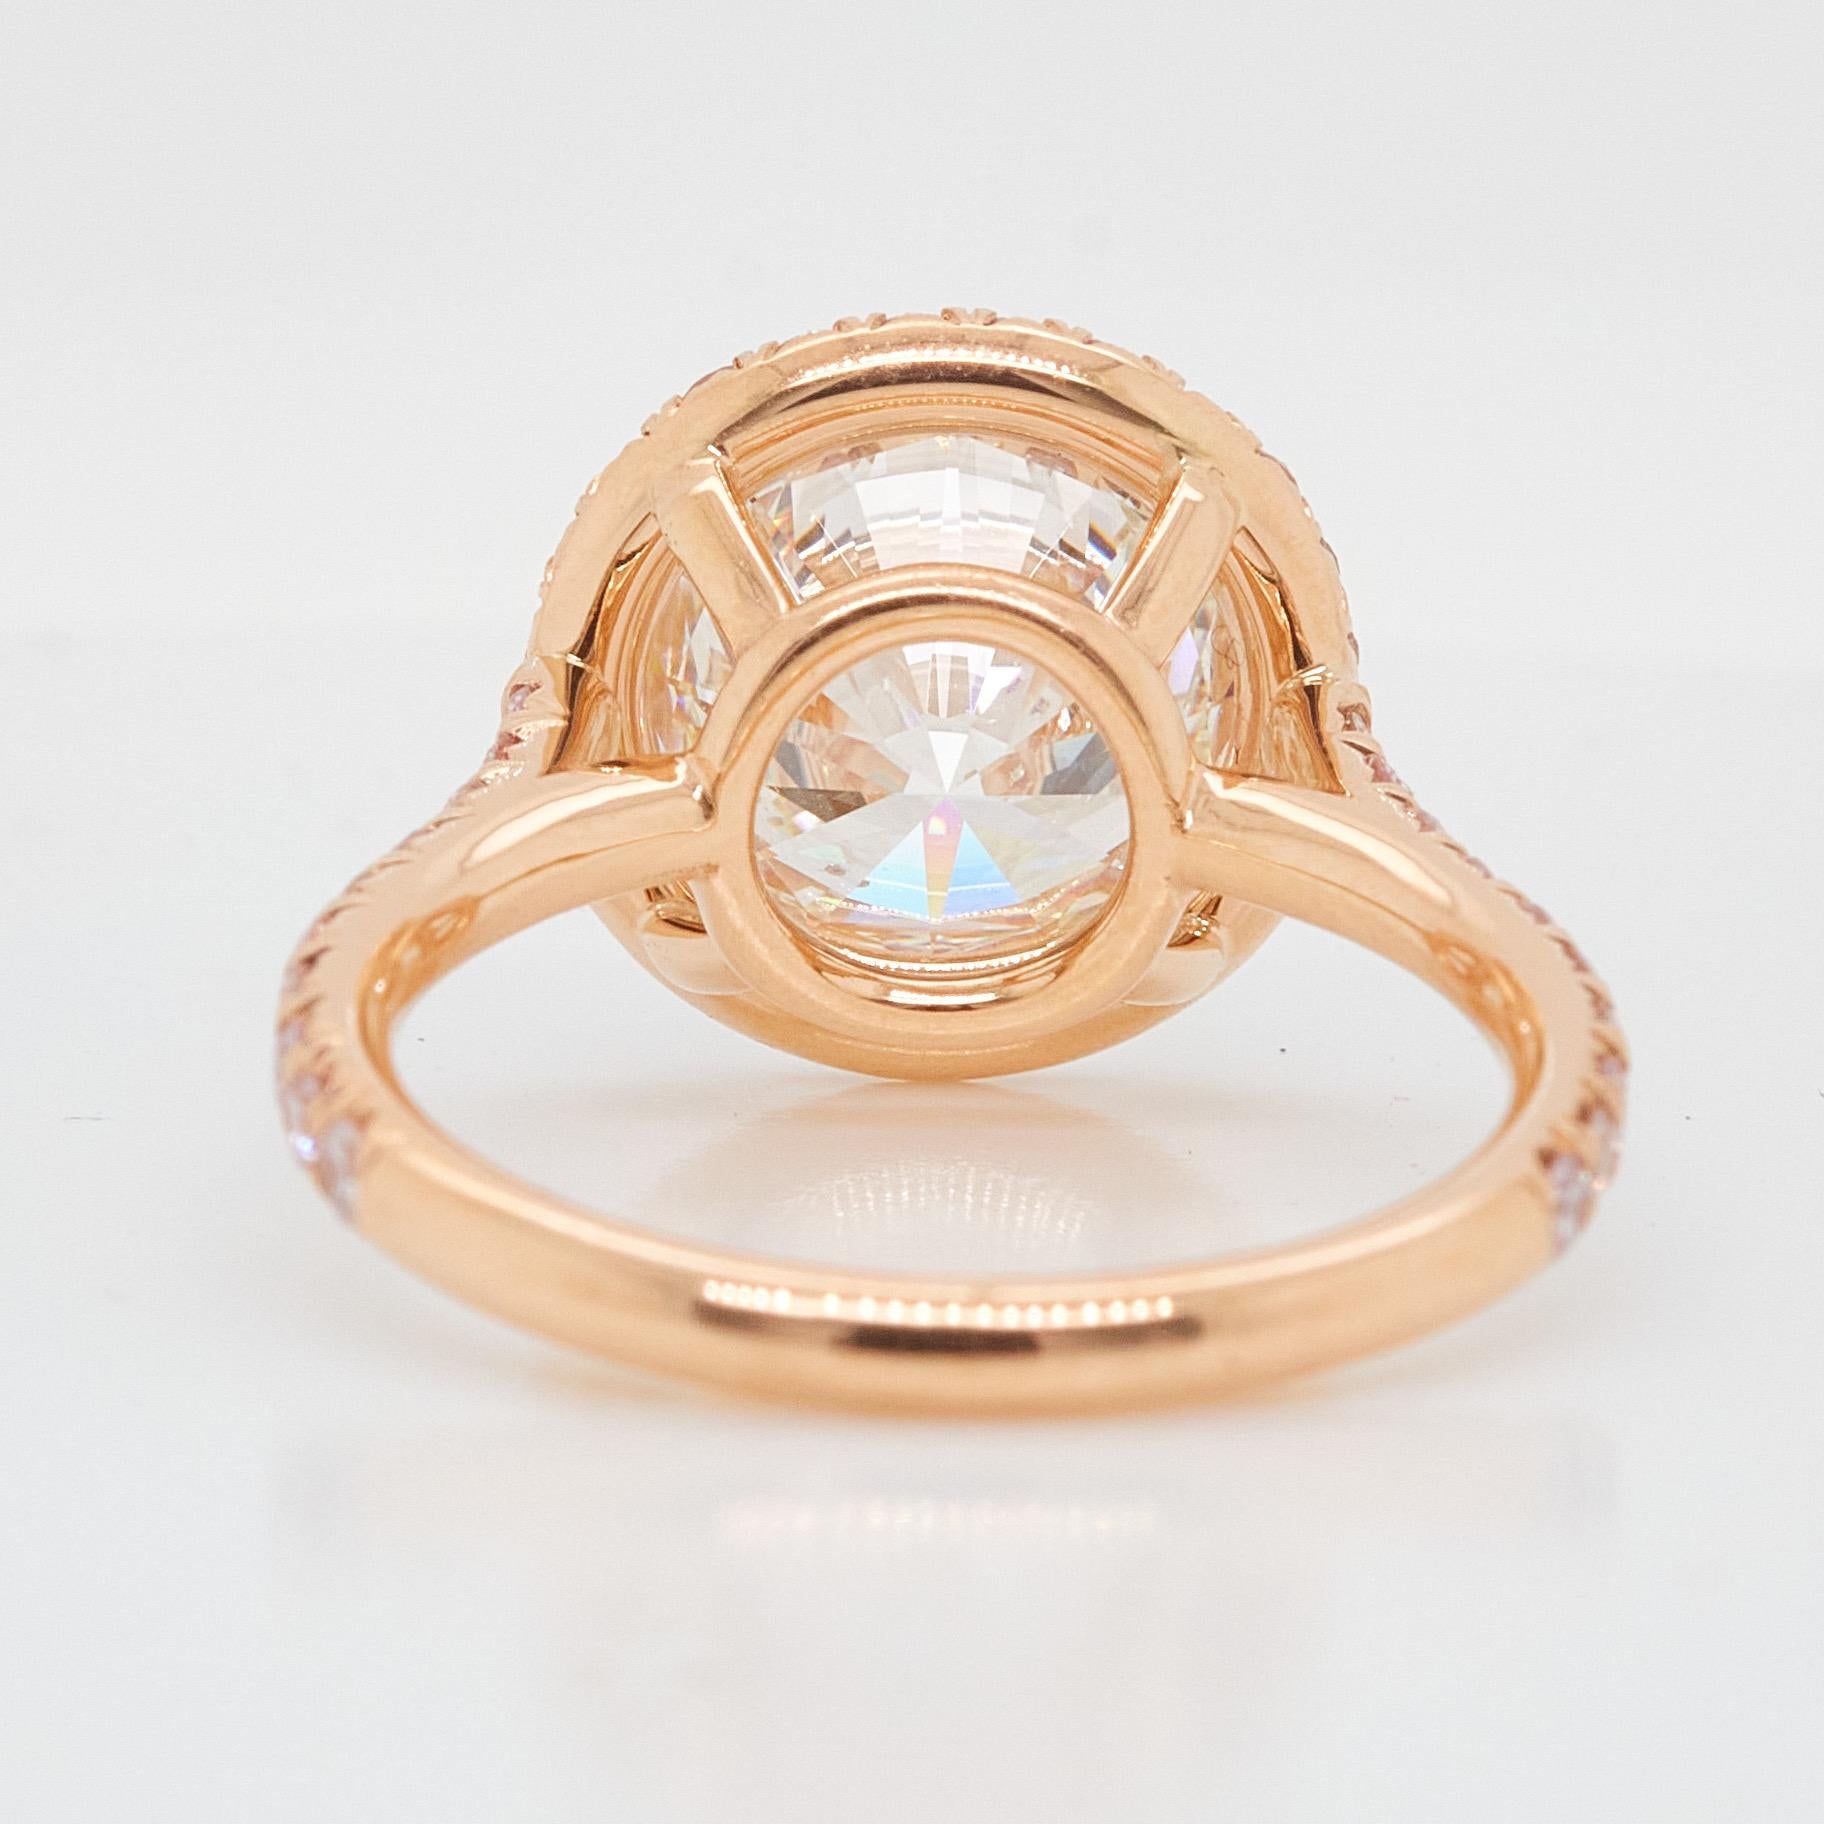 3.5-carat diamond ring price in india